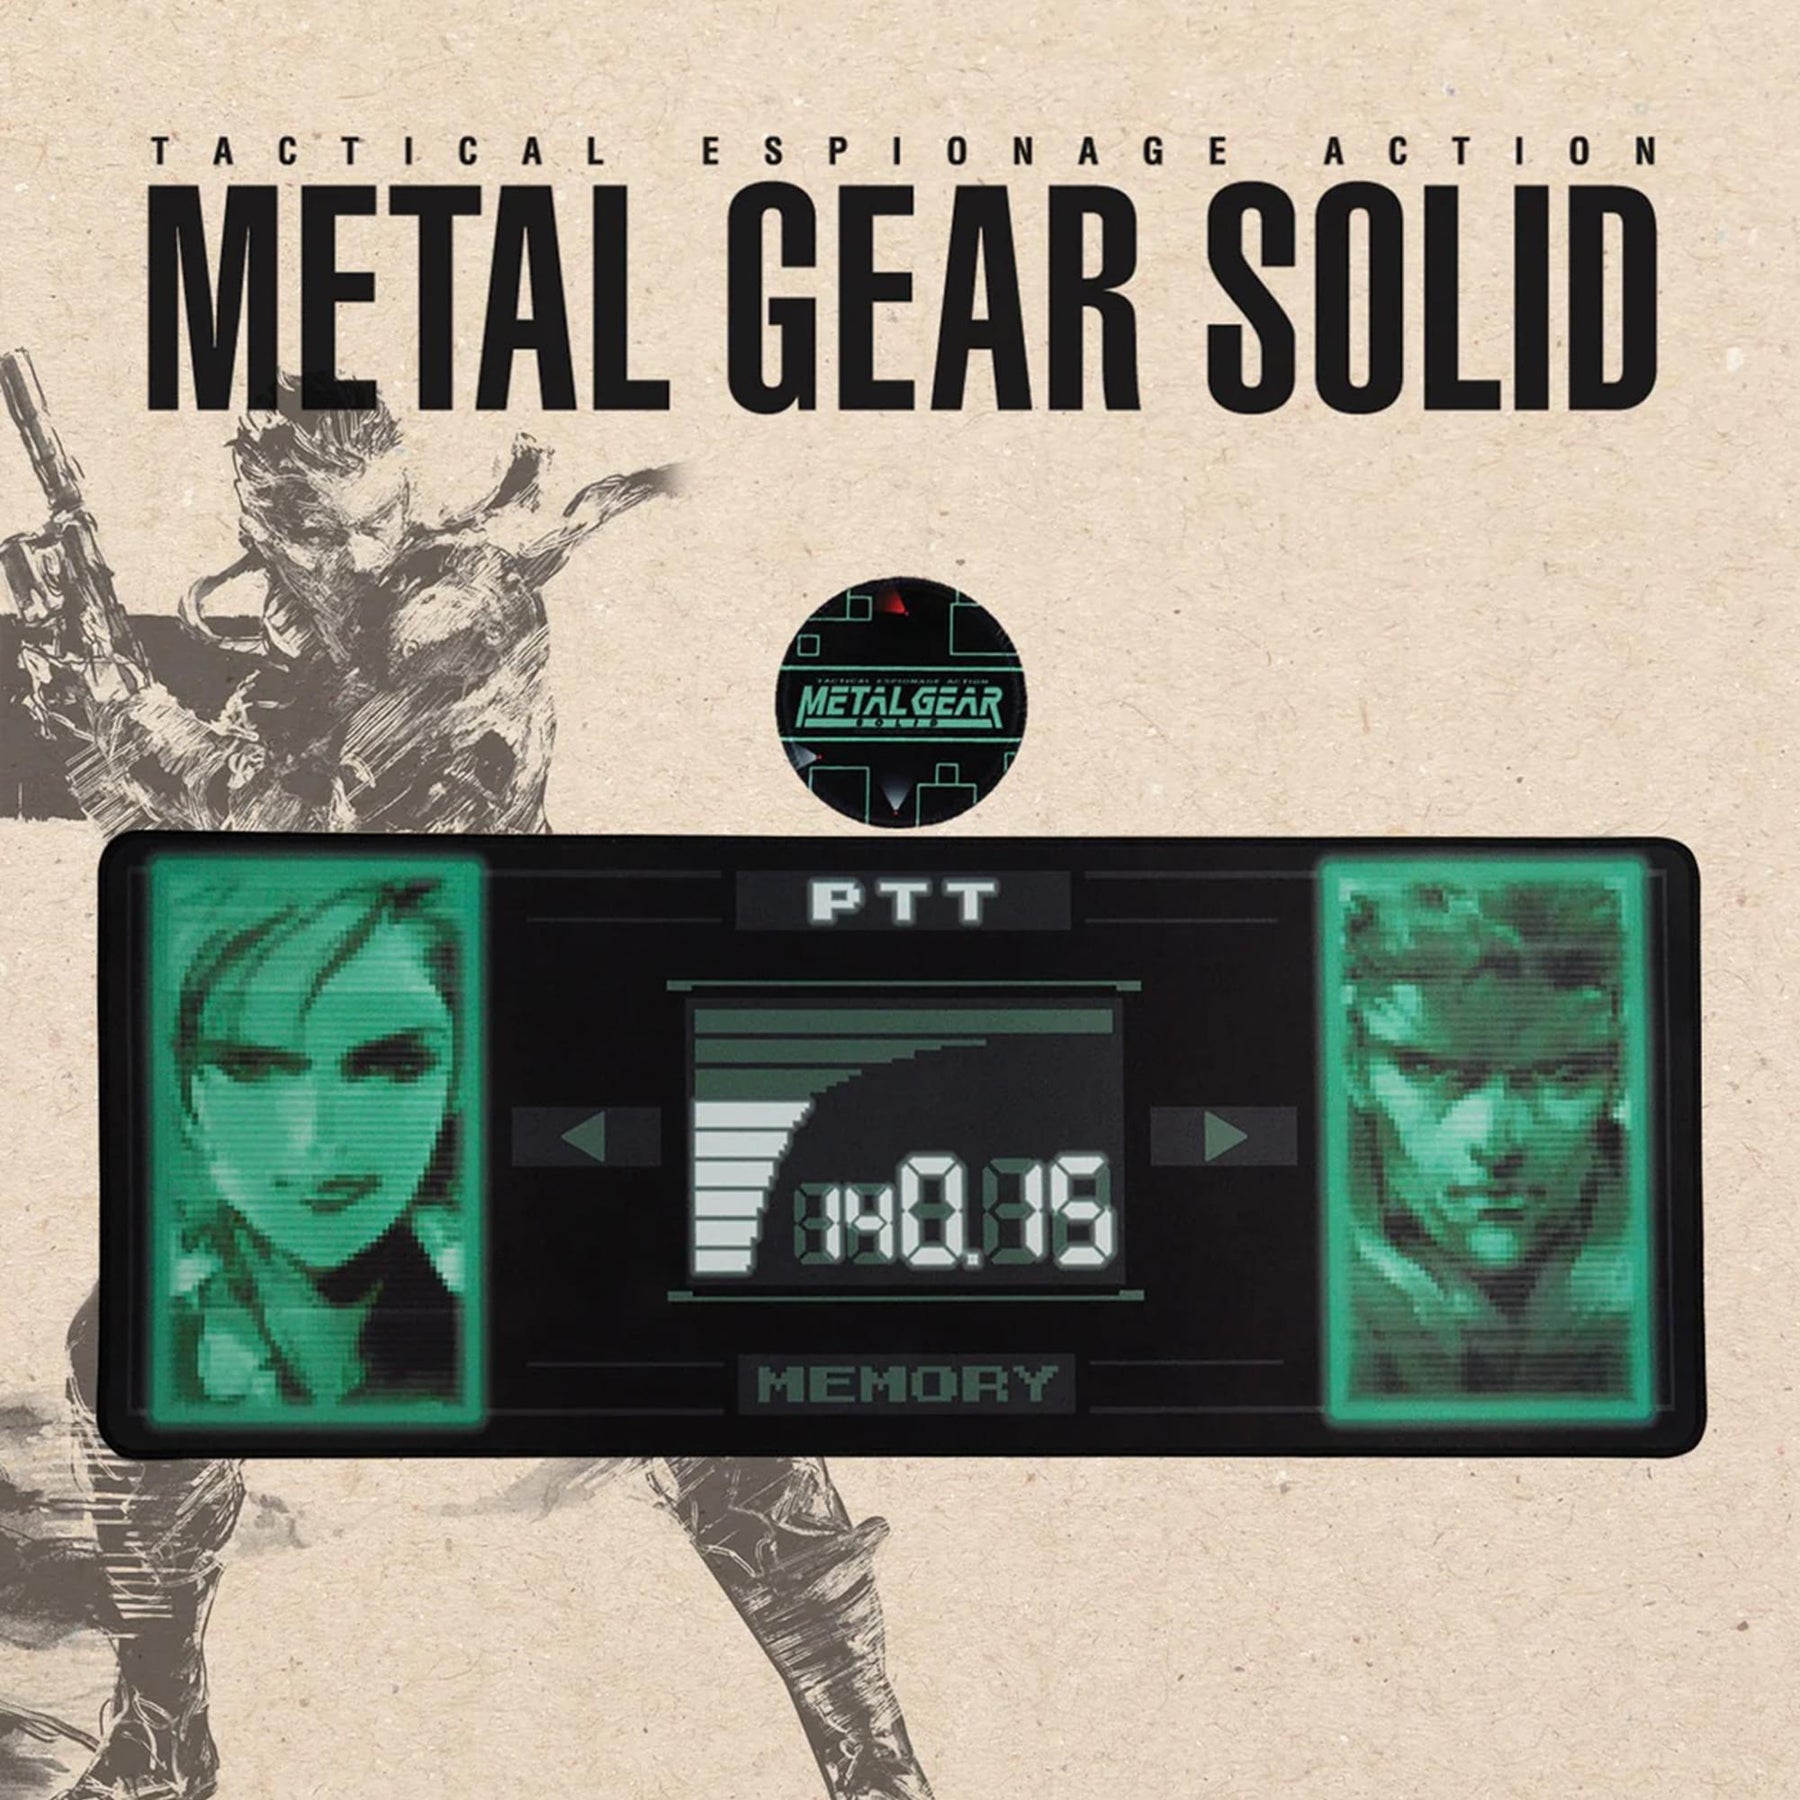 Metal Gear Solid XL Desk Pad and Coaster Set